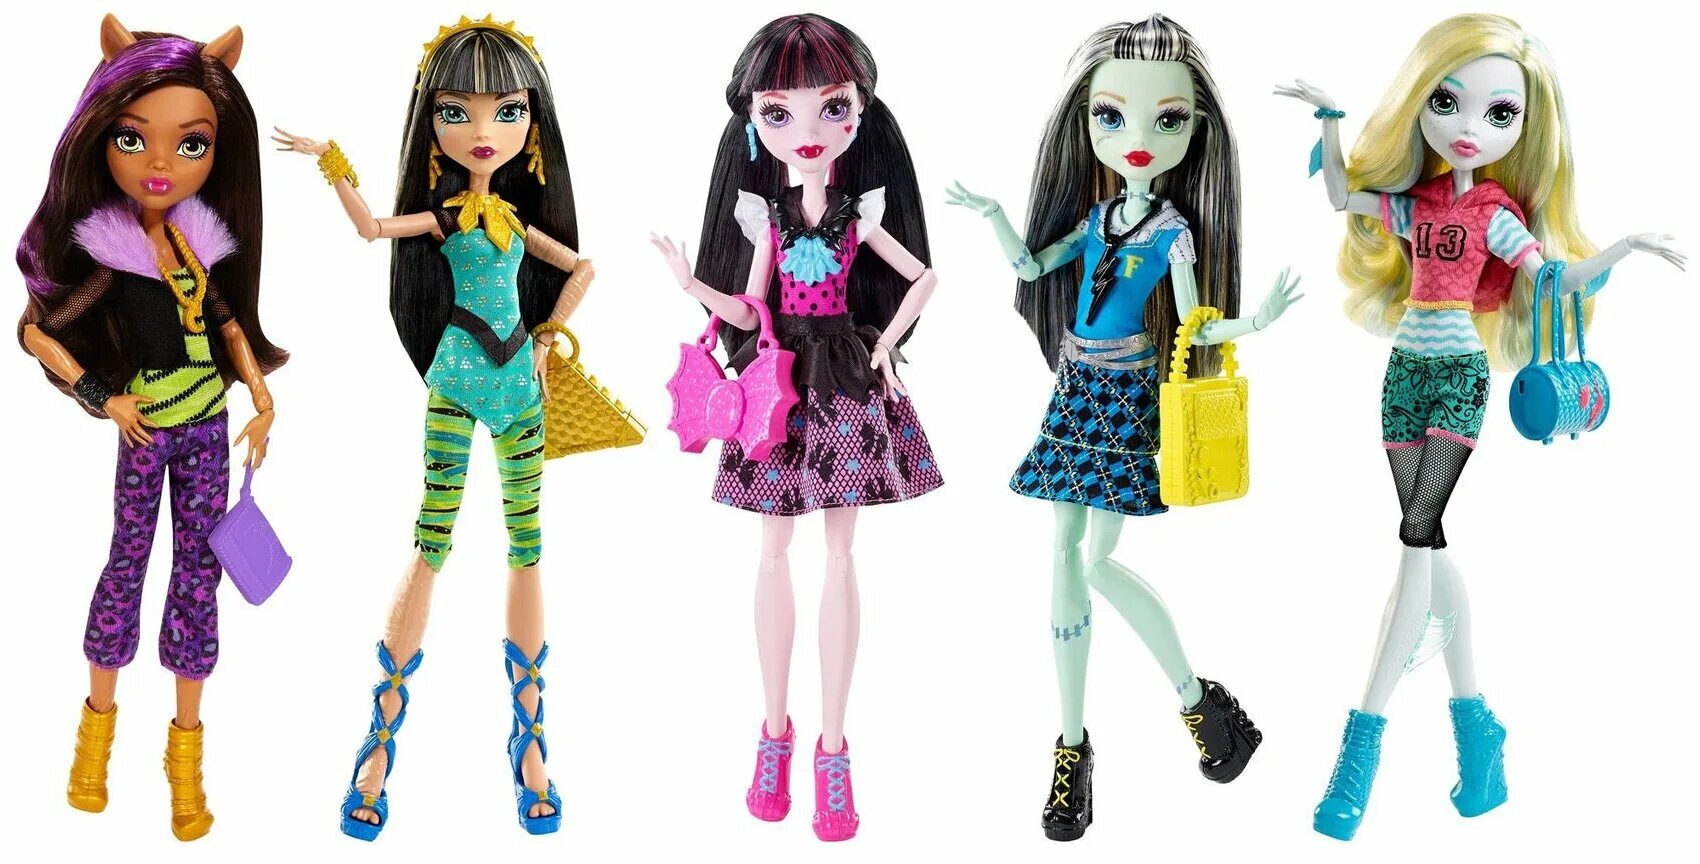 Маттел Монстер Хай. Куклы Монстер Хай 2008 года. Monster High g2 куклы. Монстр Хай куклы 1 коллекция.